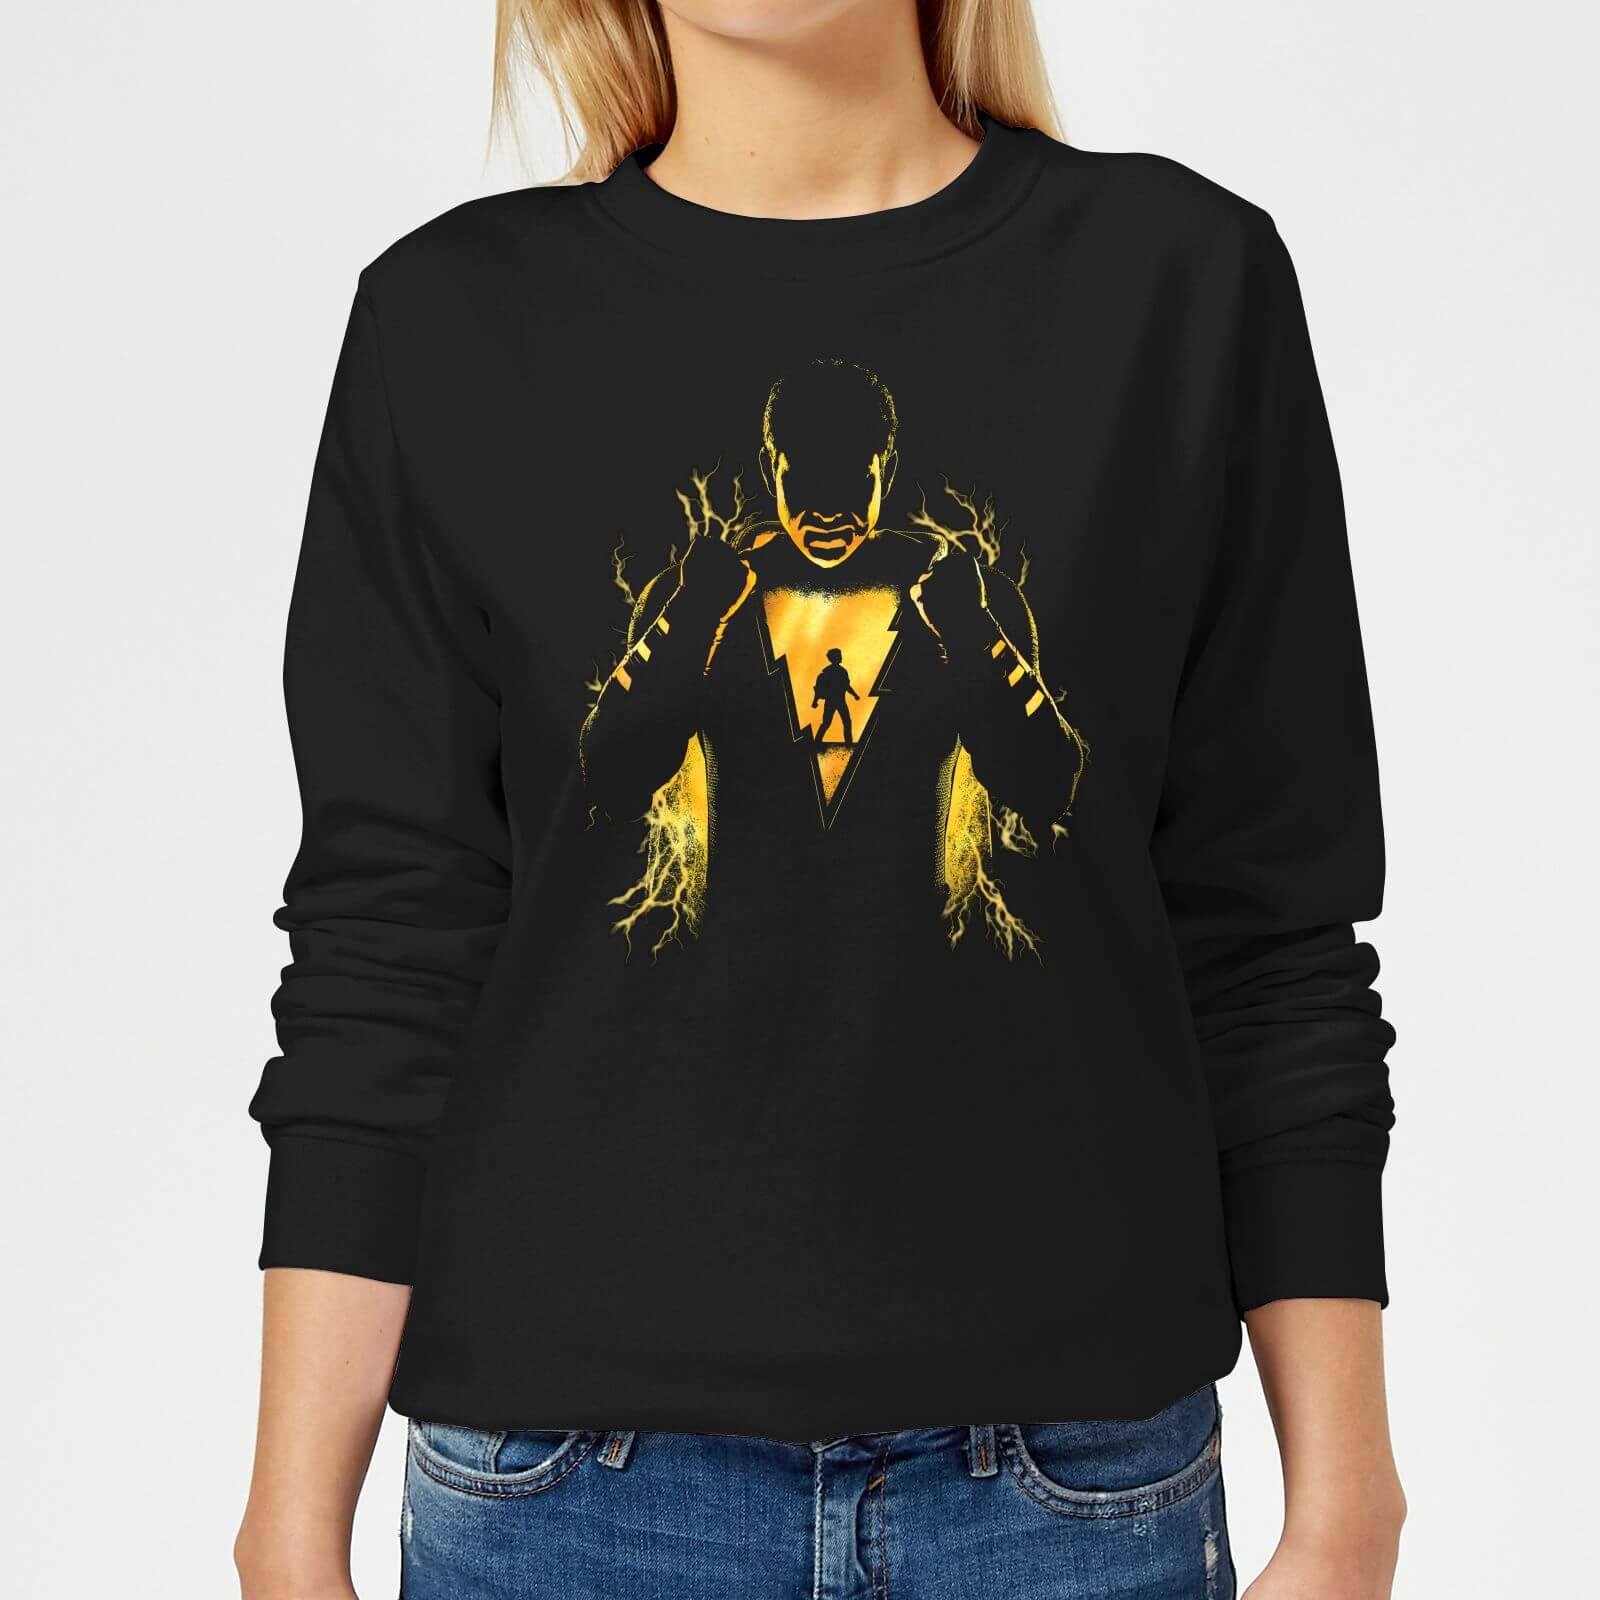 Shazam Lightning Silhouette Women's Sweatshirt - Black - XS - Black